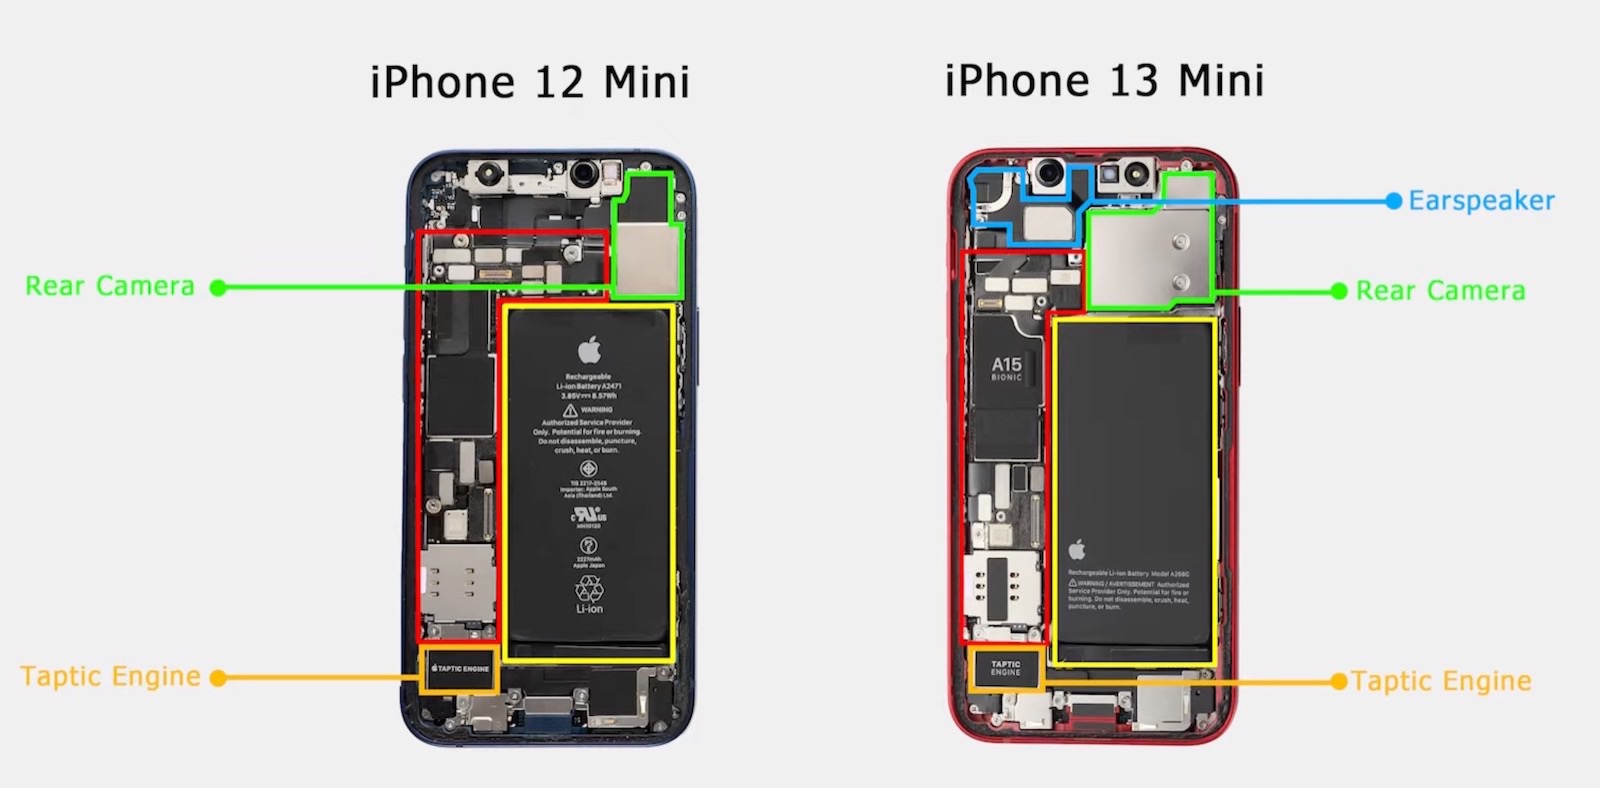 iphone-12-mini-and-13-mini-comparison.jpg